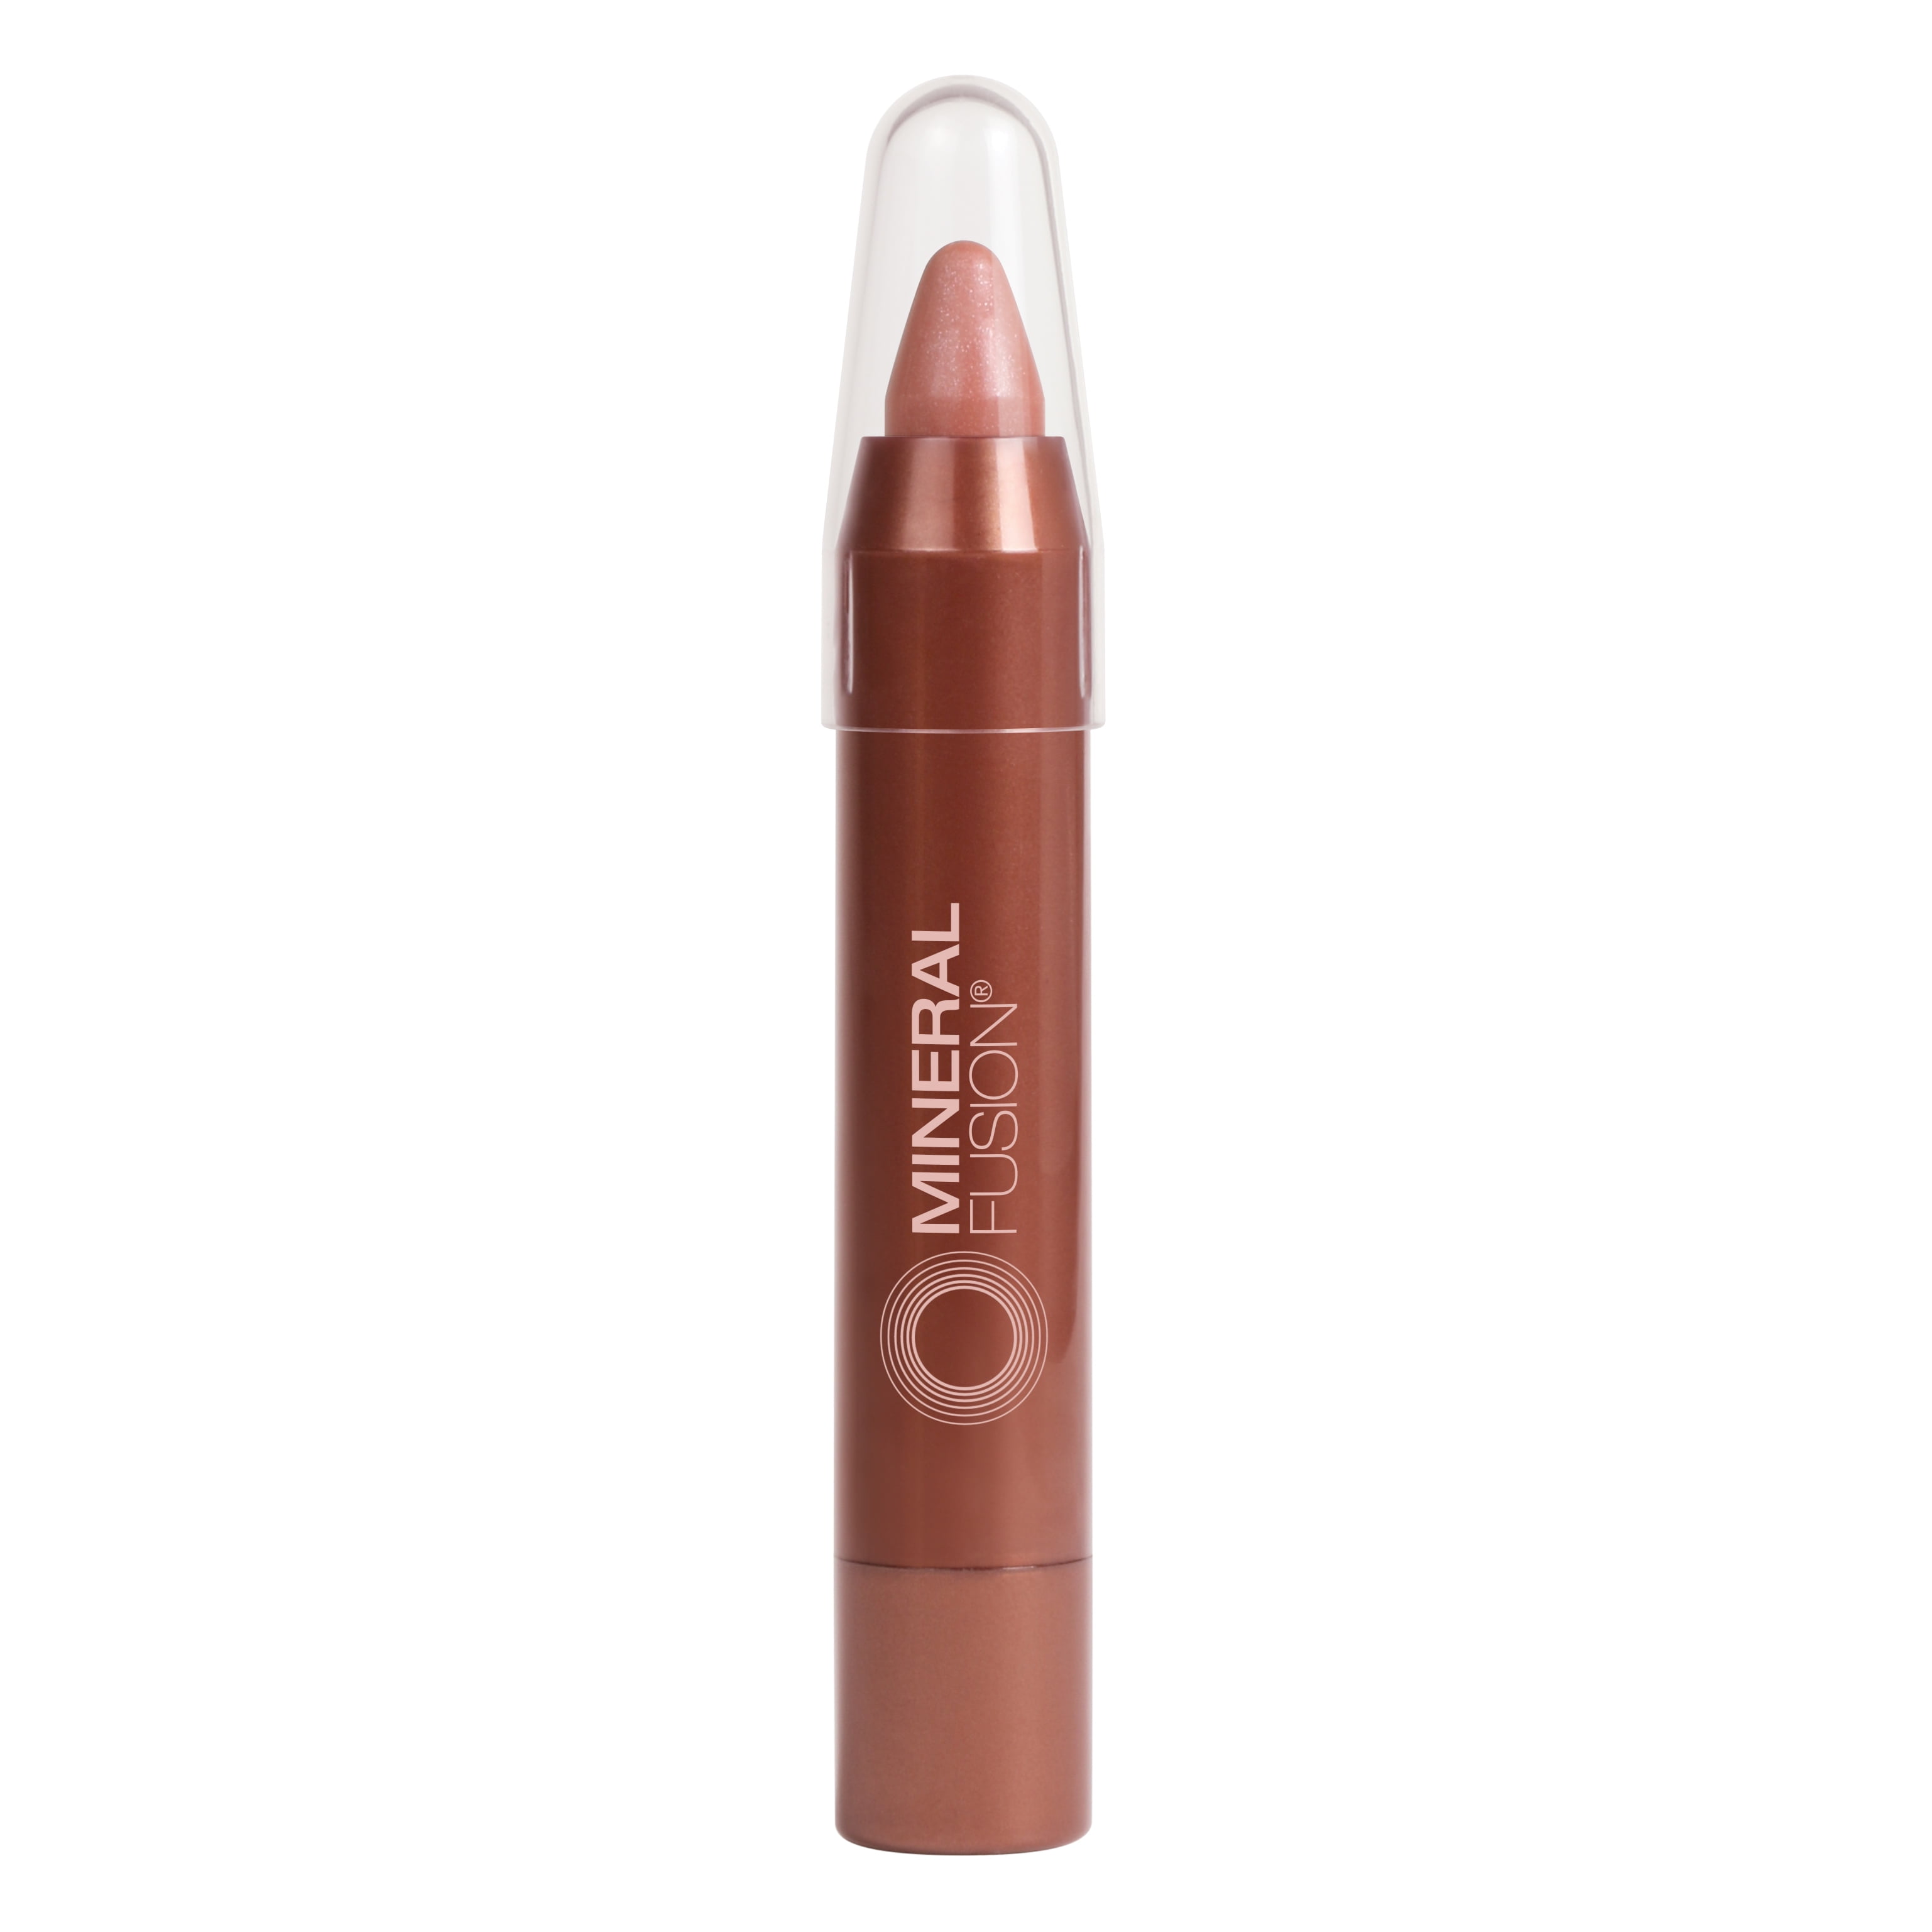 Sheer Lipstick, Balm Sheer Mineral Tint Fusion Glisten, 0.11oz Lip Moisture Caramel Nude Lip